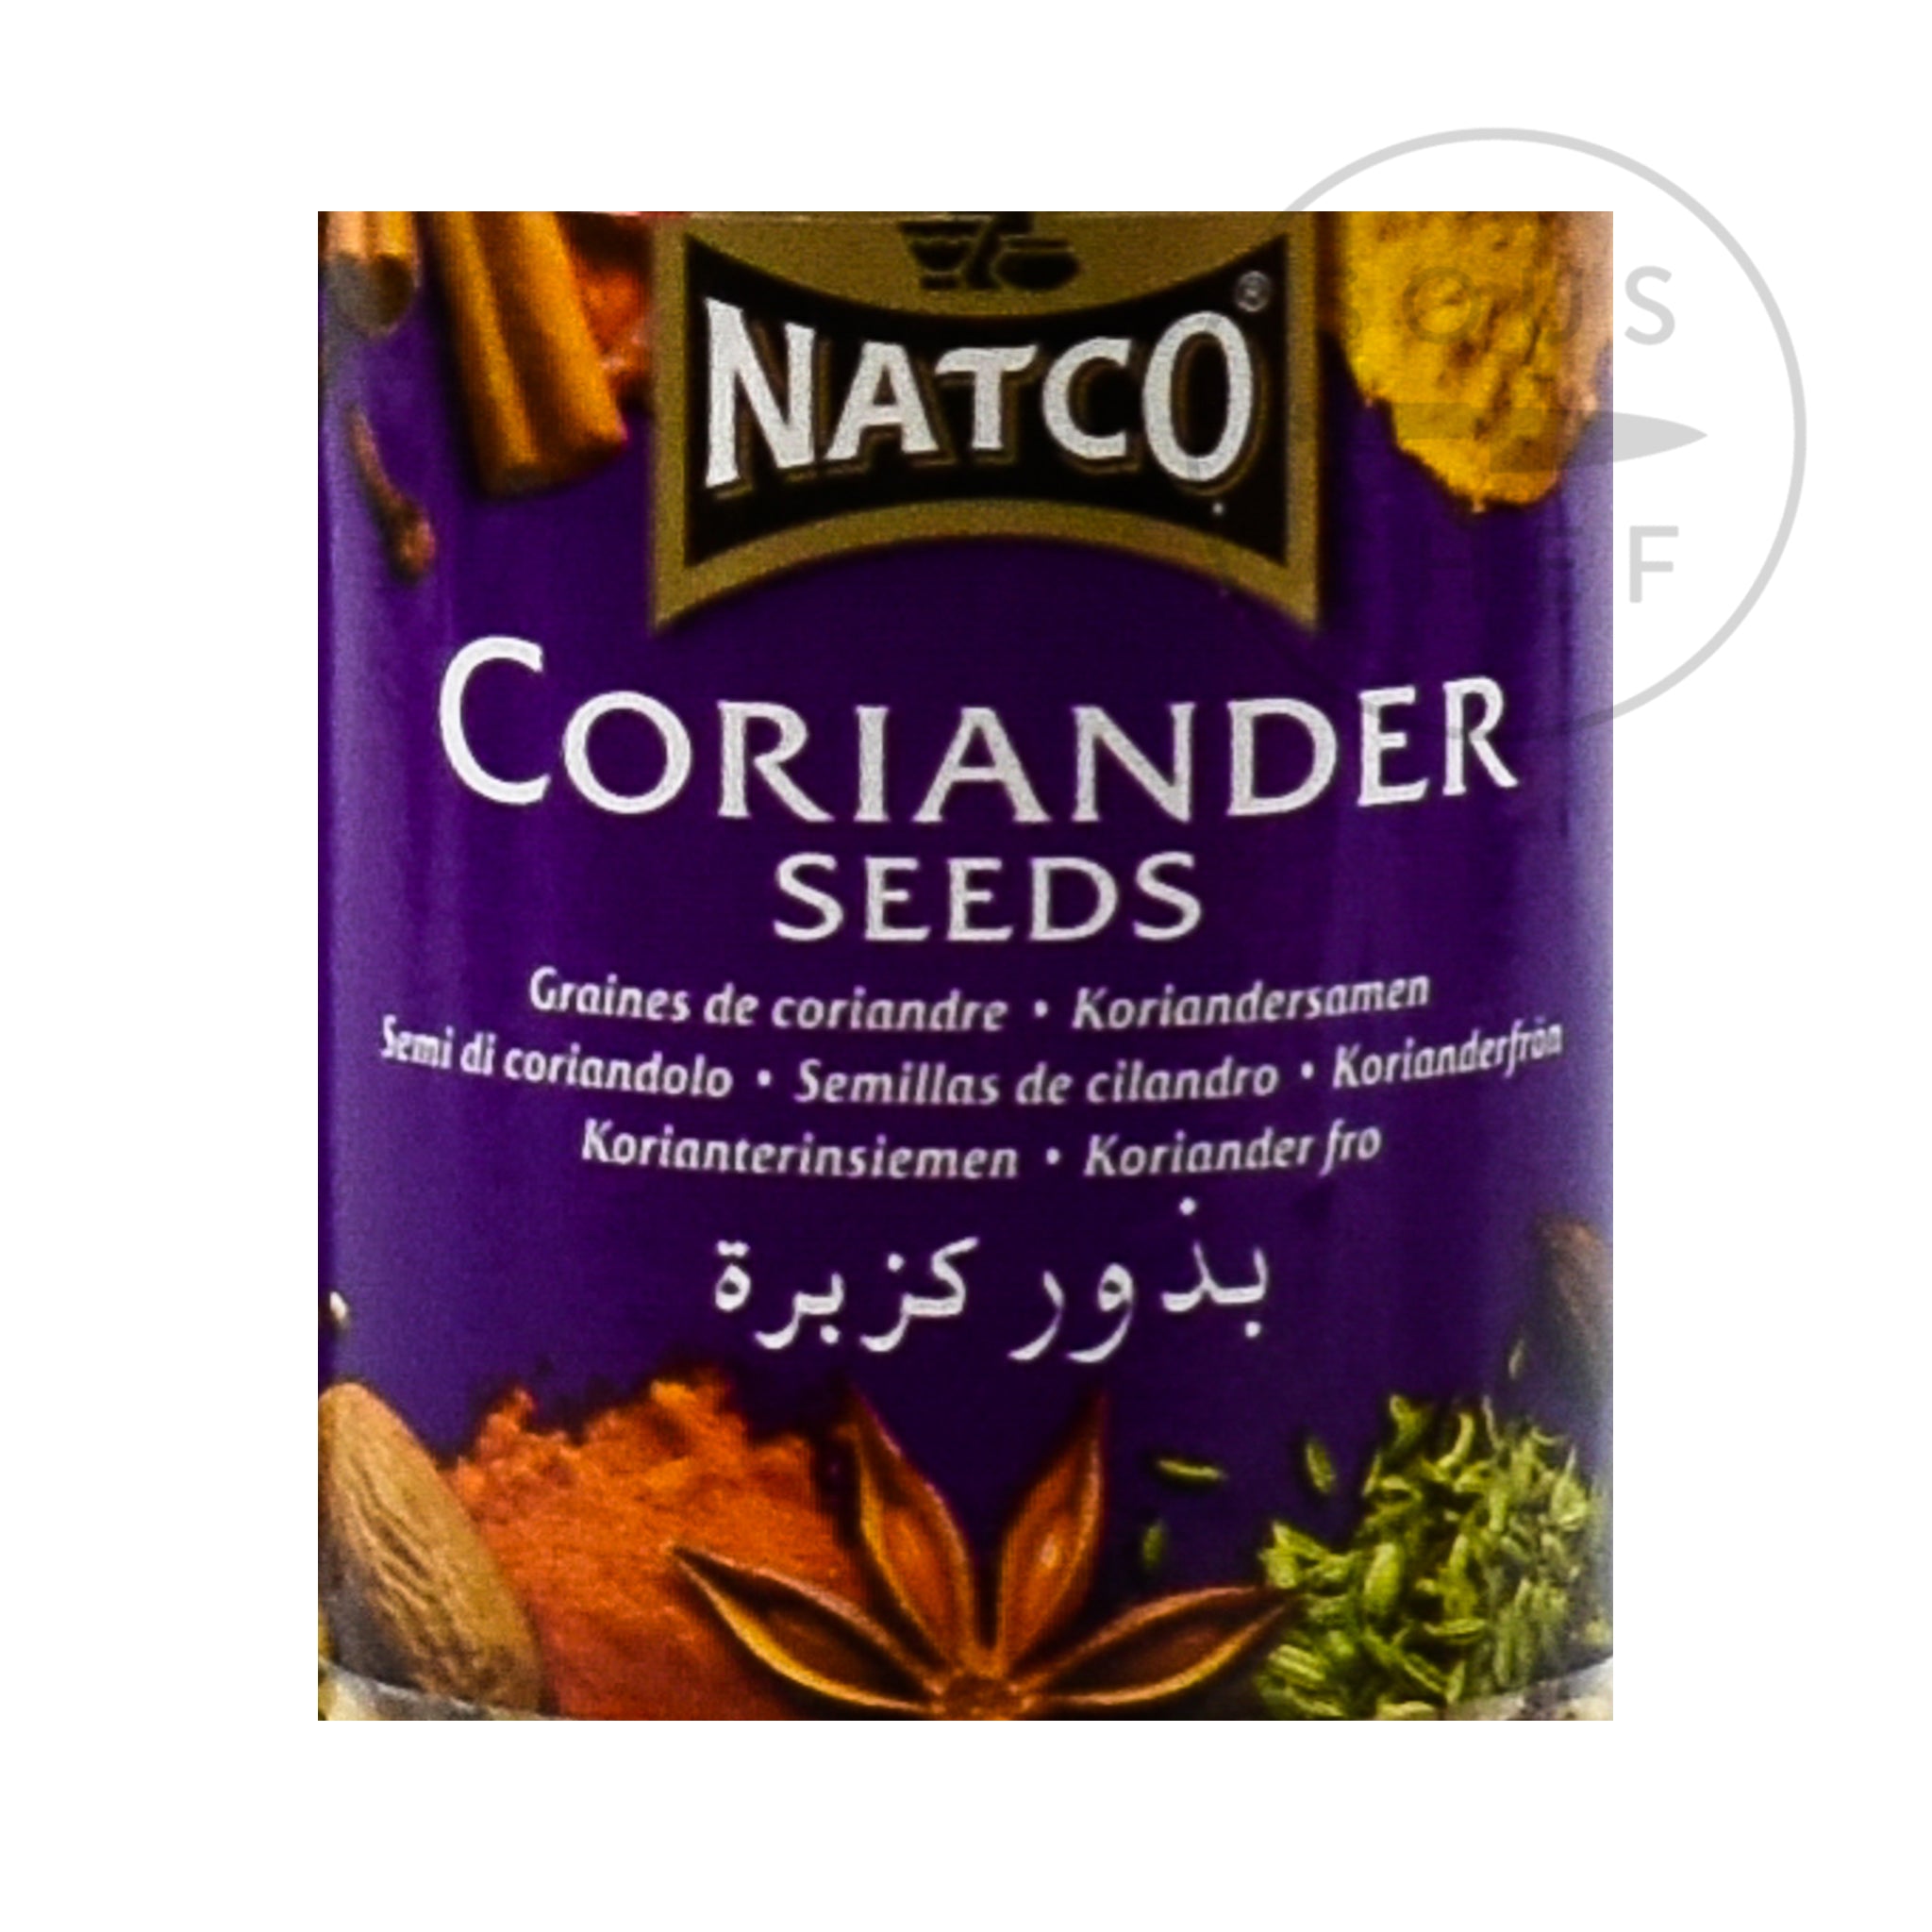 Natco Coriander Seeds, 60g